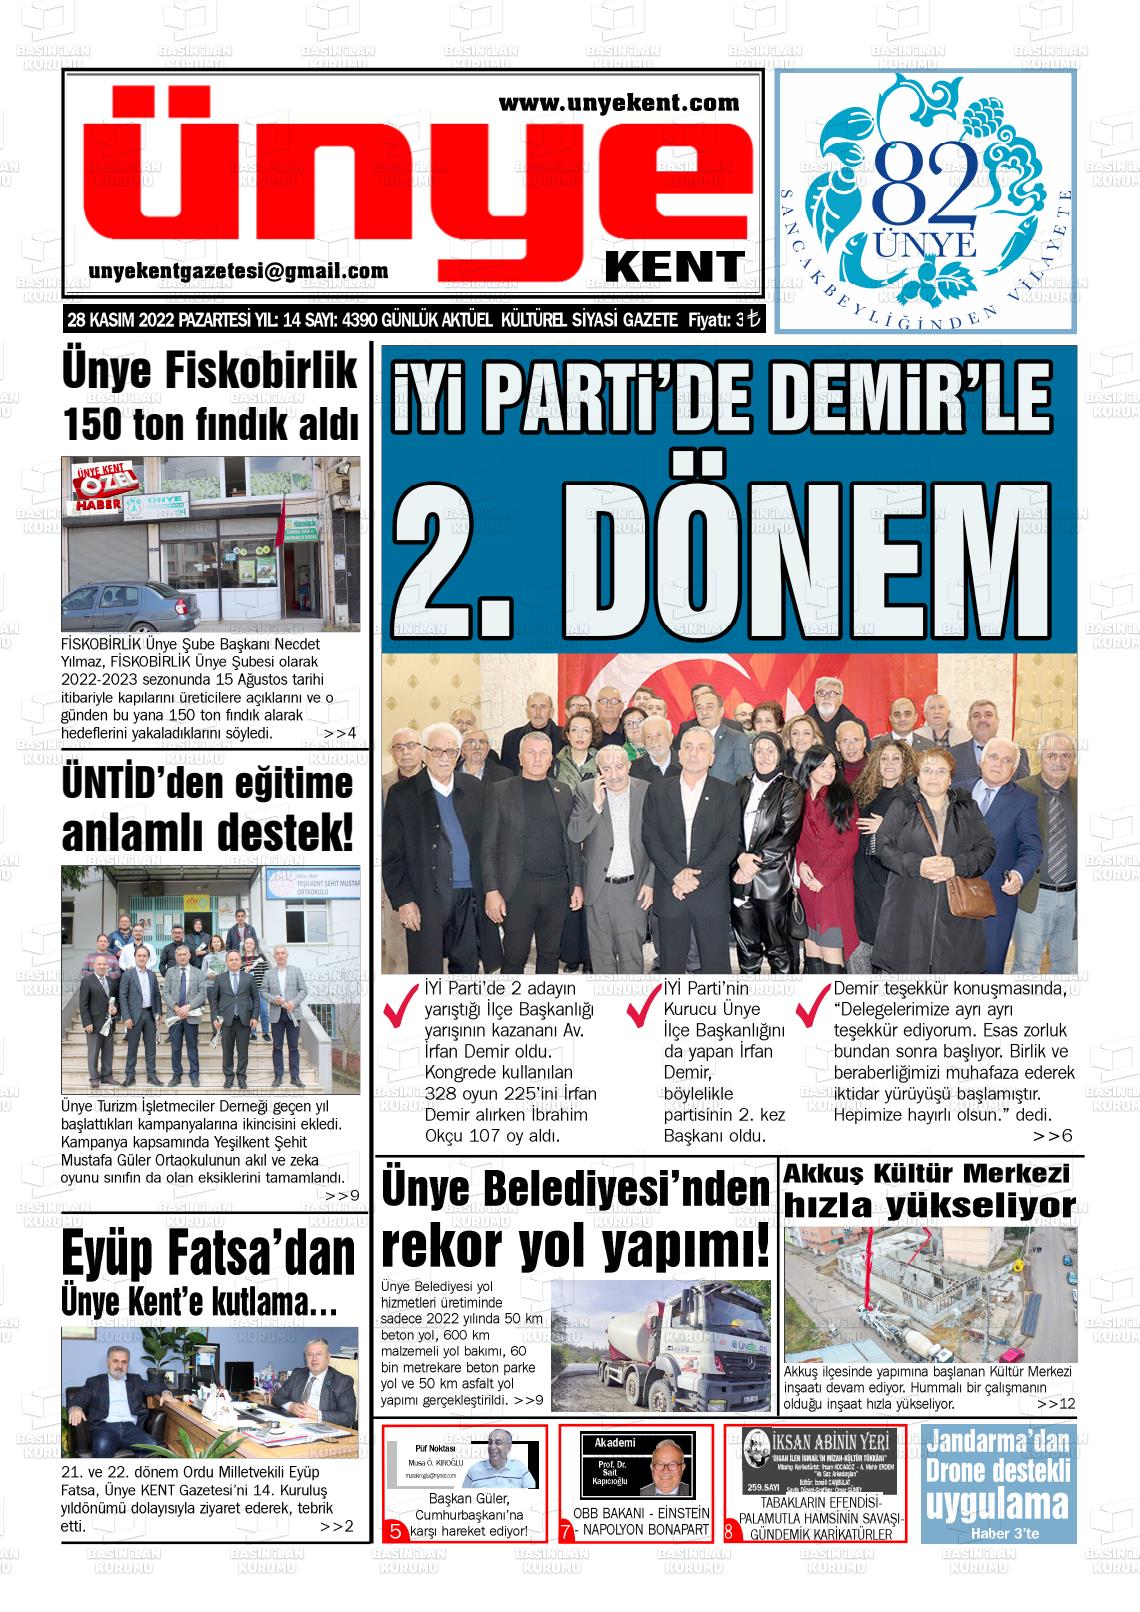 28 Kasım 2022 Ünye Kent Gazete Manşeti